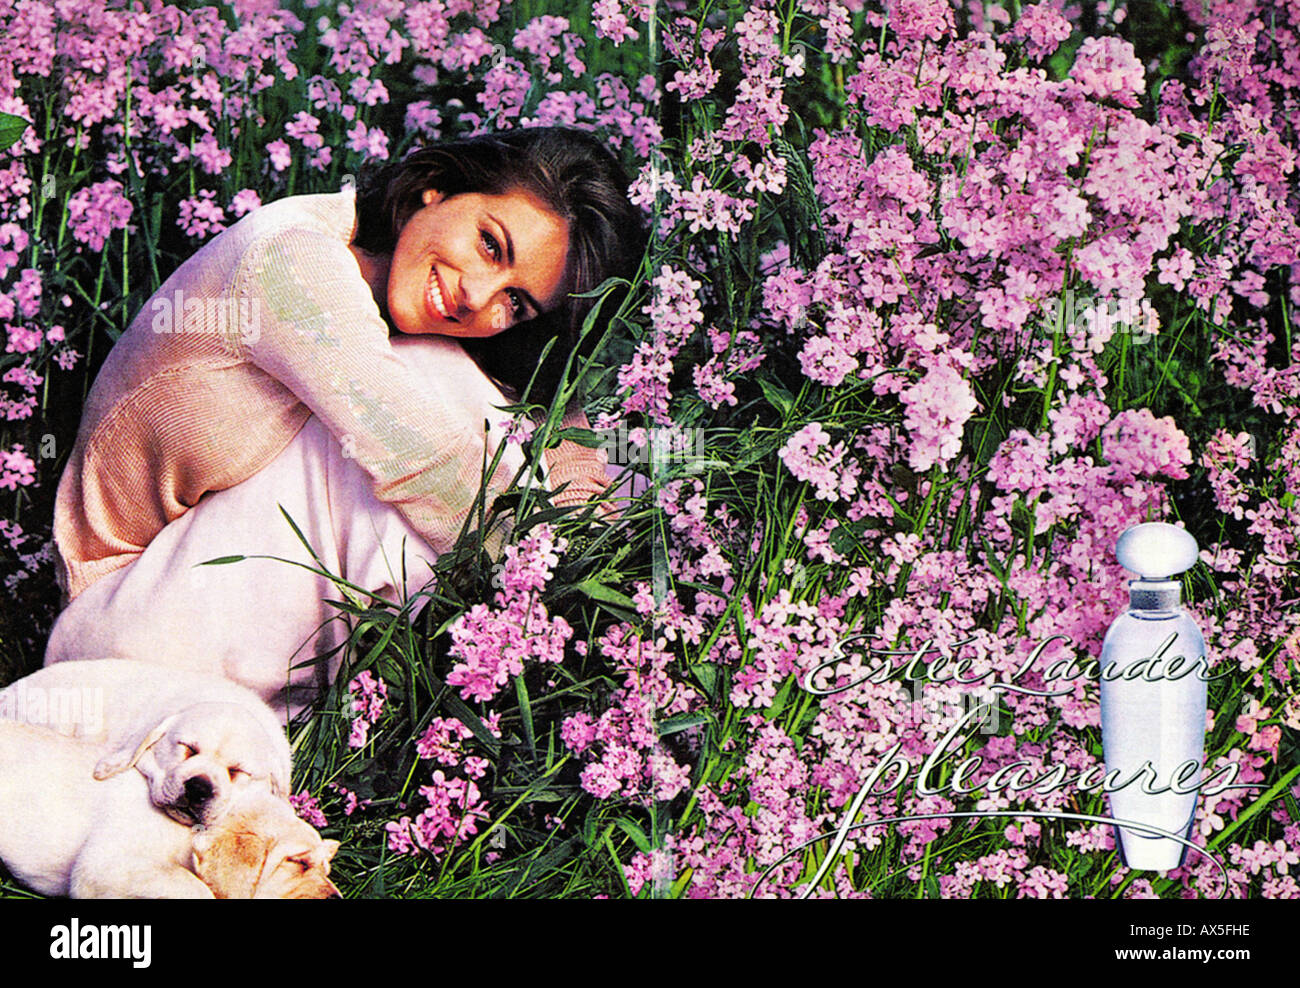 ELIZABETH HURLEY UK actress in an advert for Pleasures perfume by Estee Lauder Stock Photo